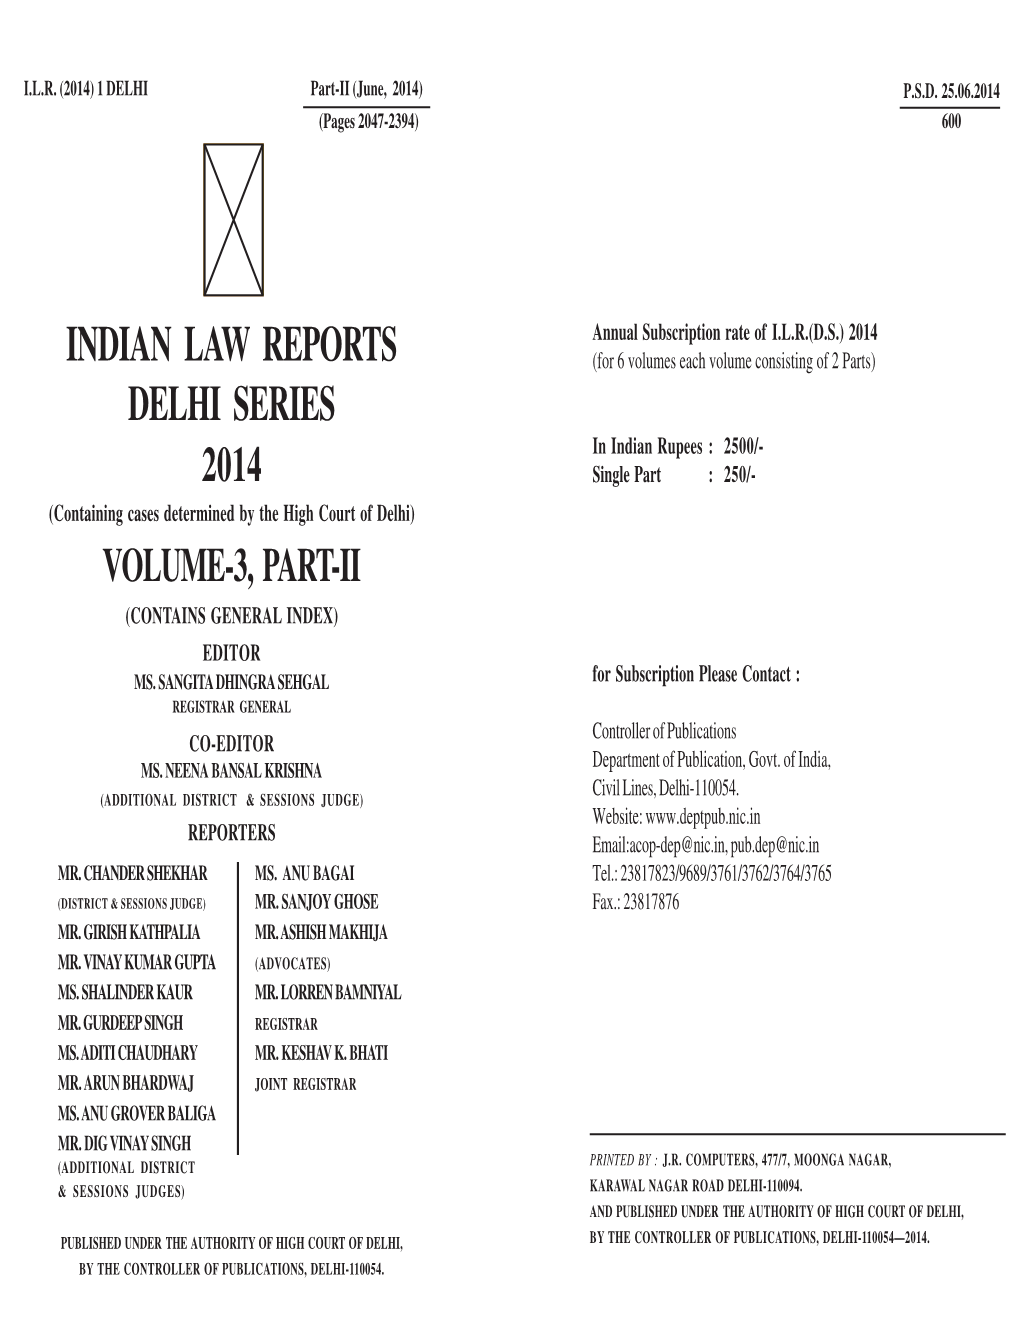 Indian Law Reports Delhi Series 2014